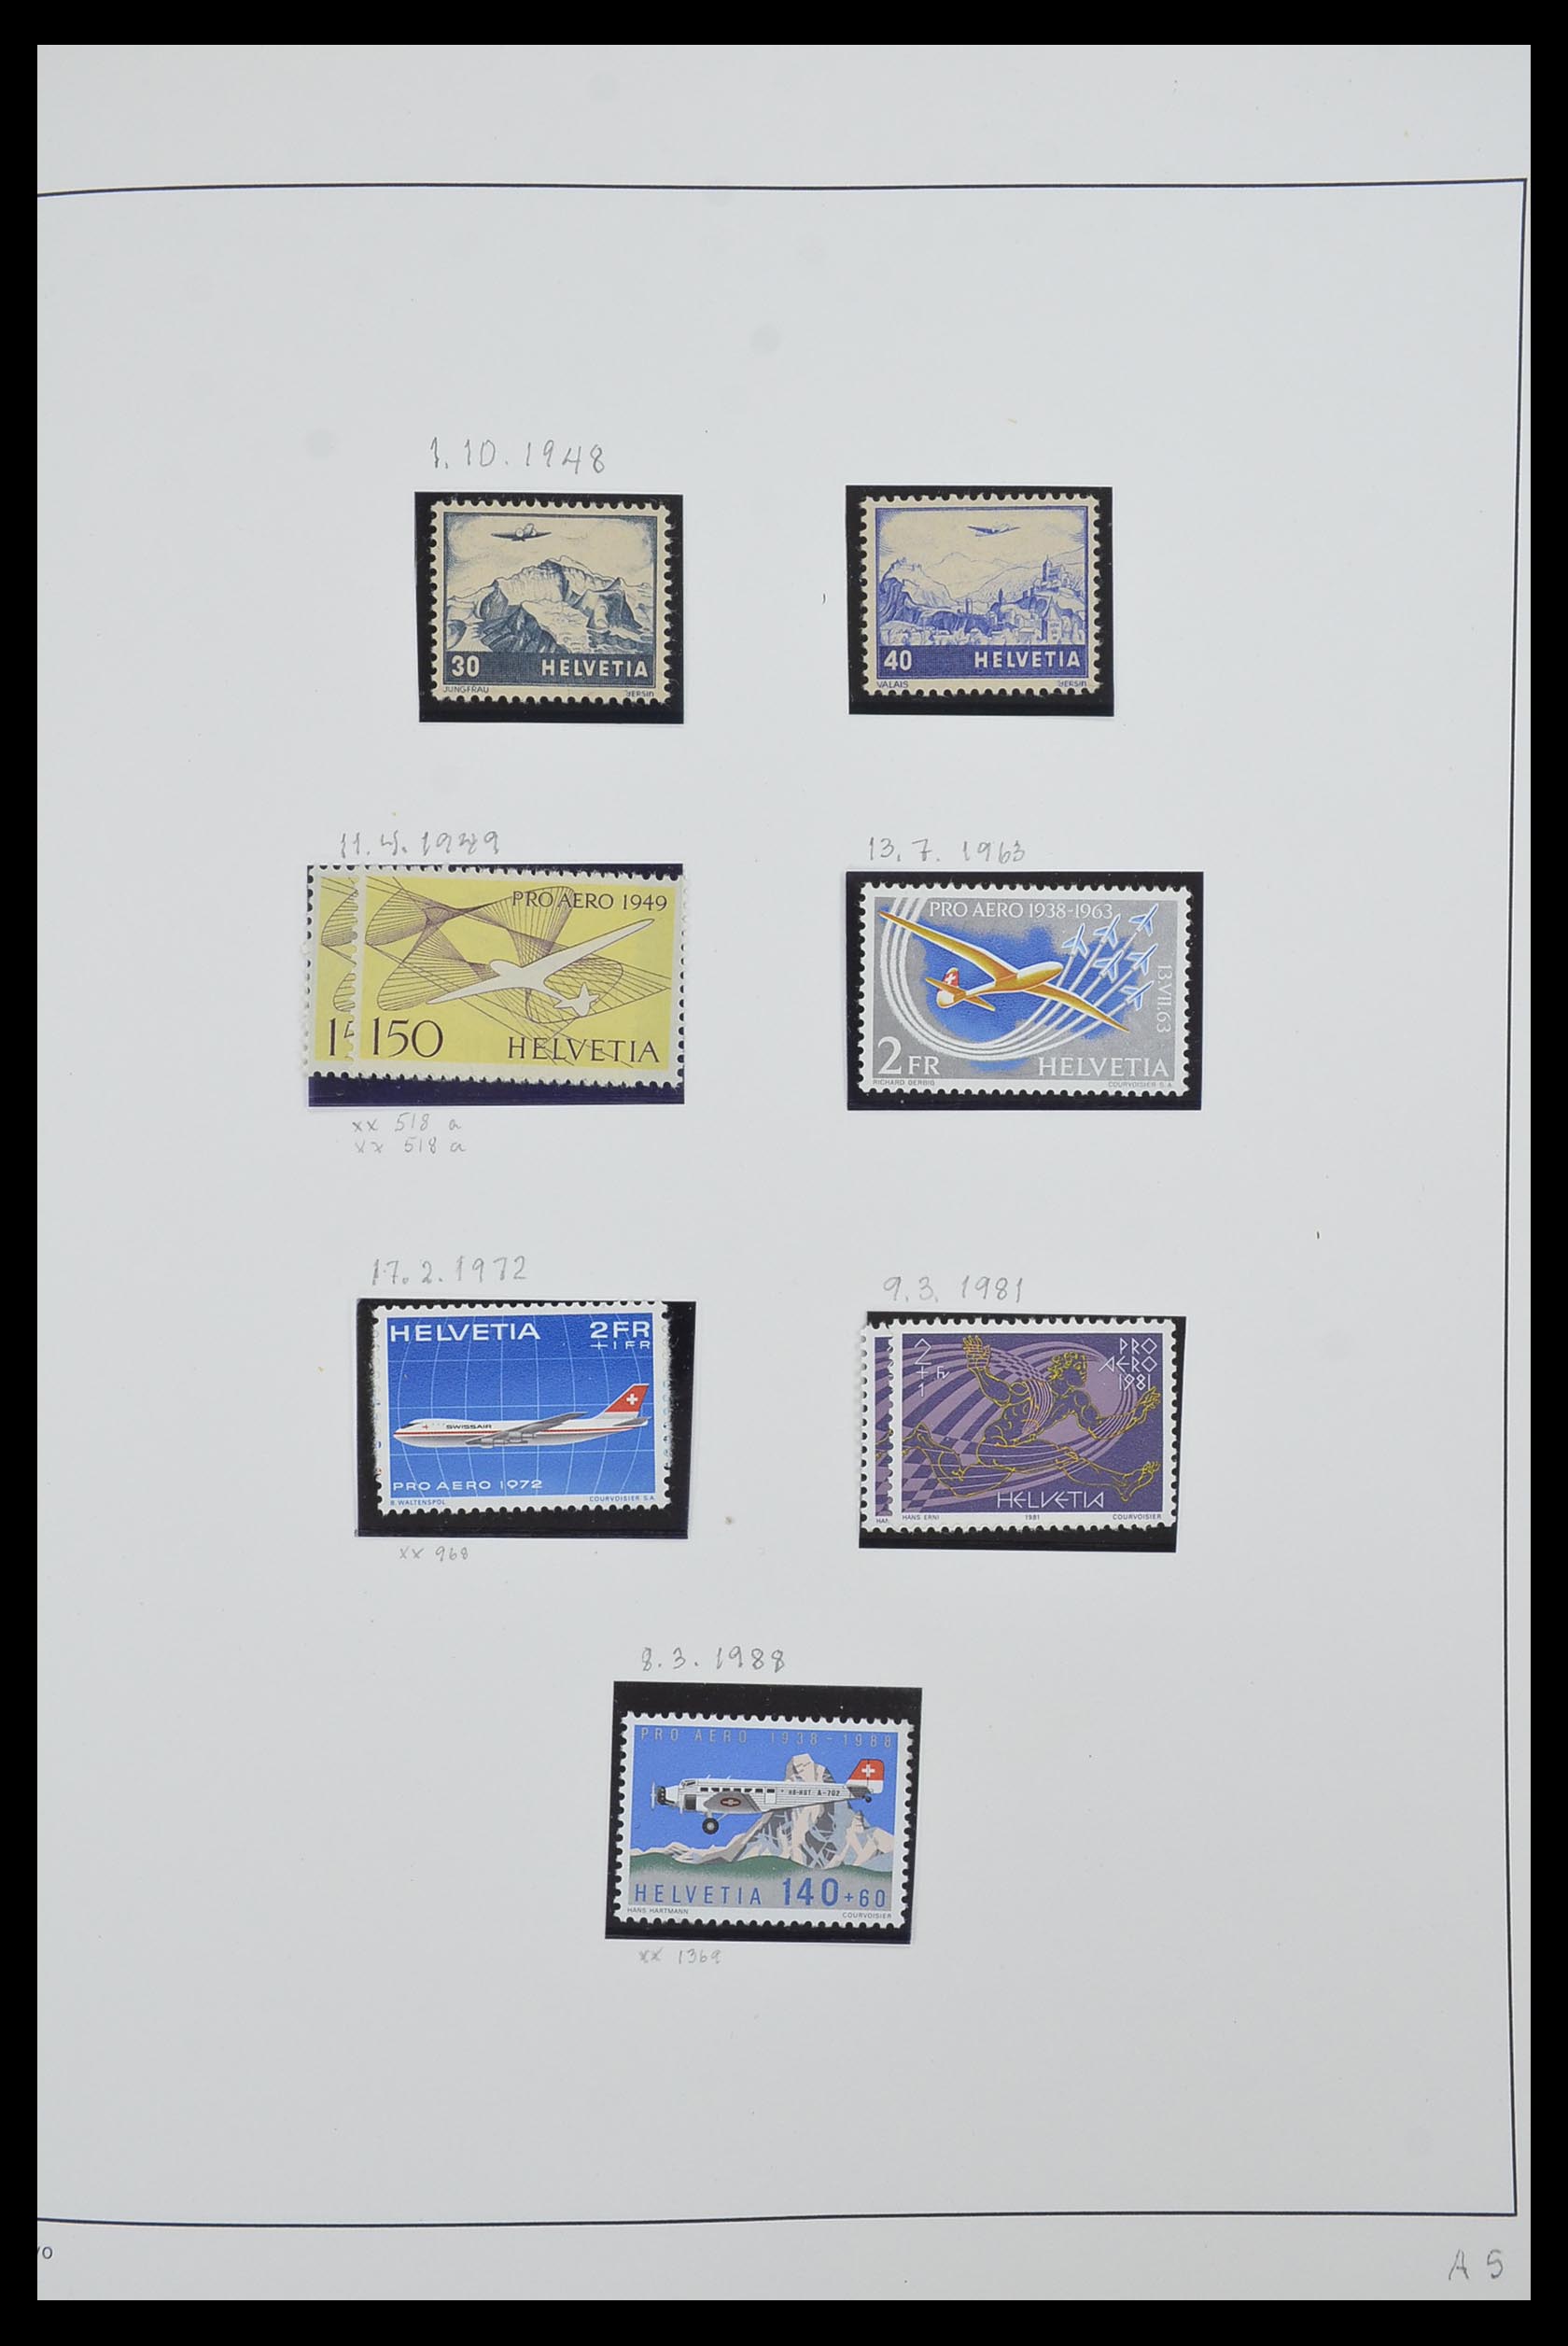 33556 135 - Stamp collection 33556 Switzerland 1862-2000.